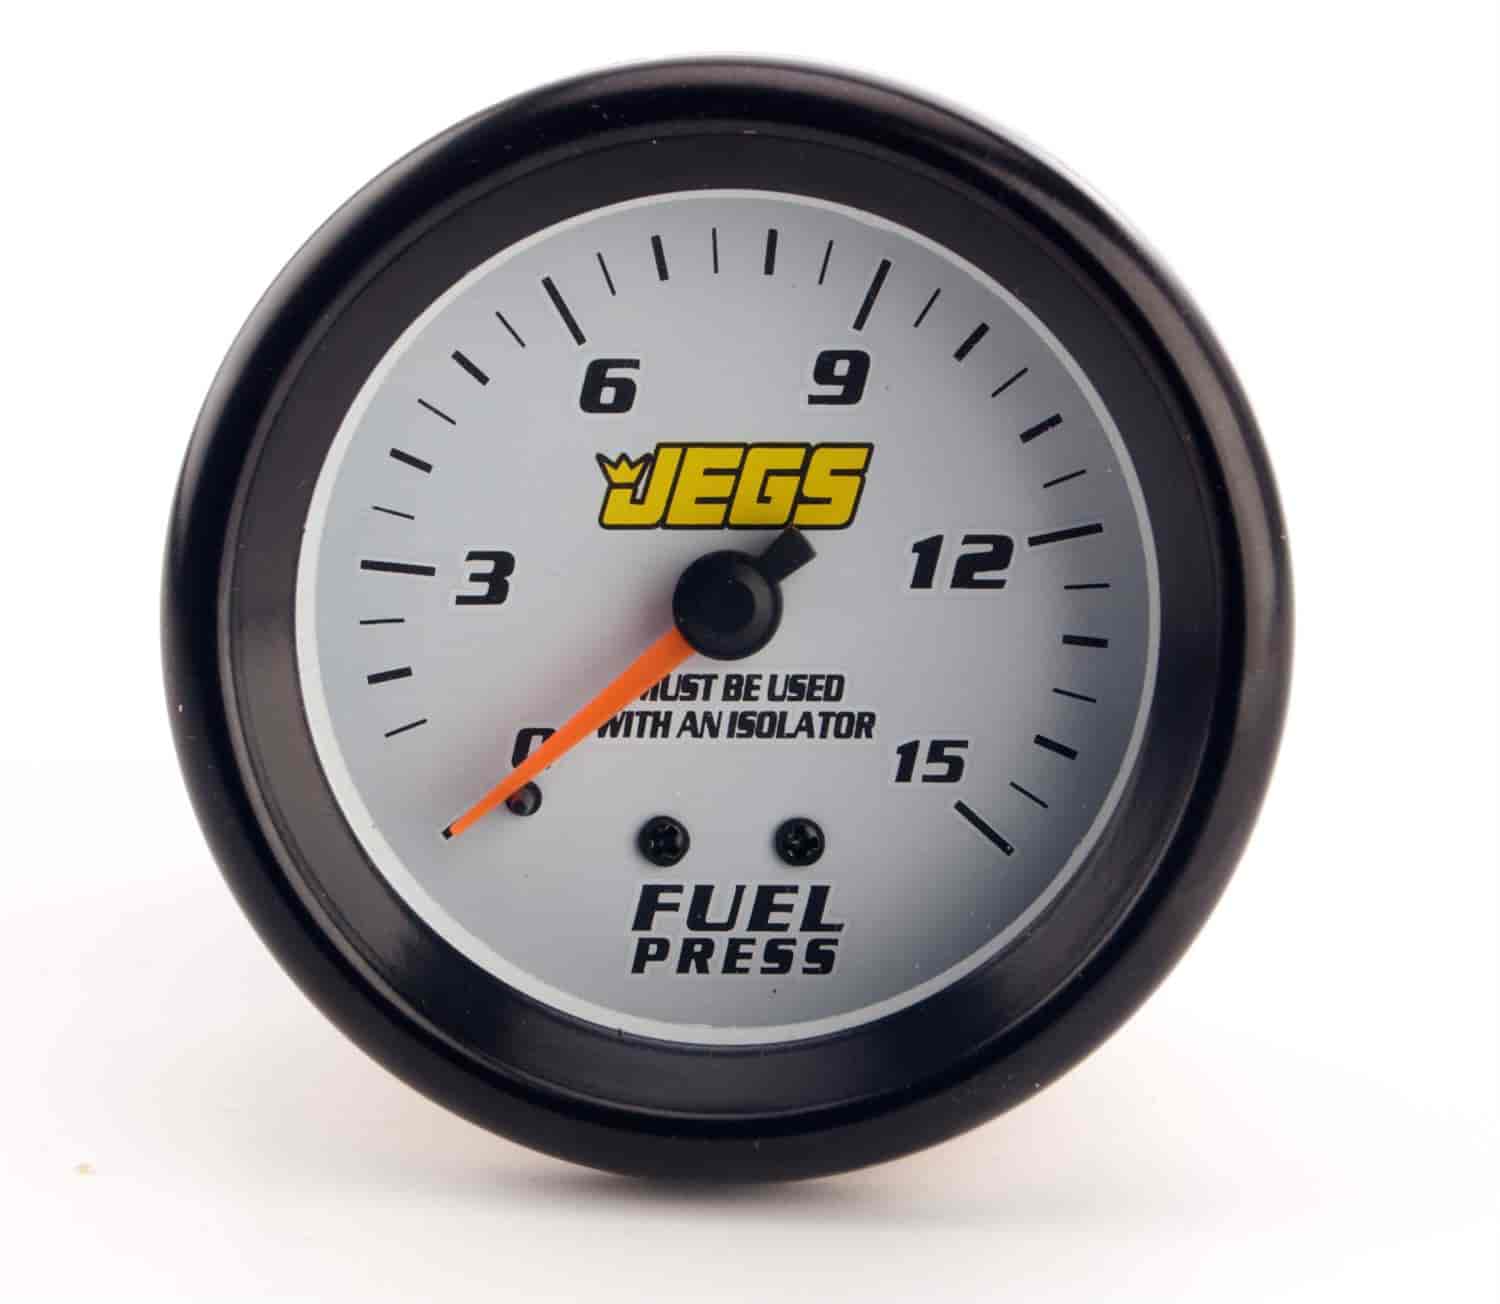 2-5/8" Mechanical Fuel Pressure Gauge 0-15 psi